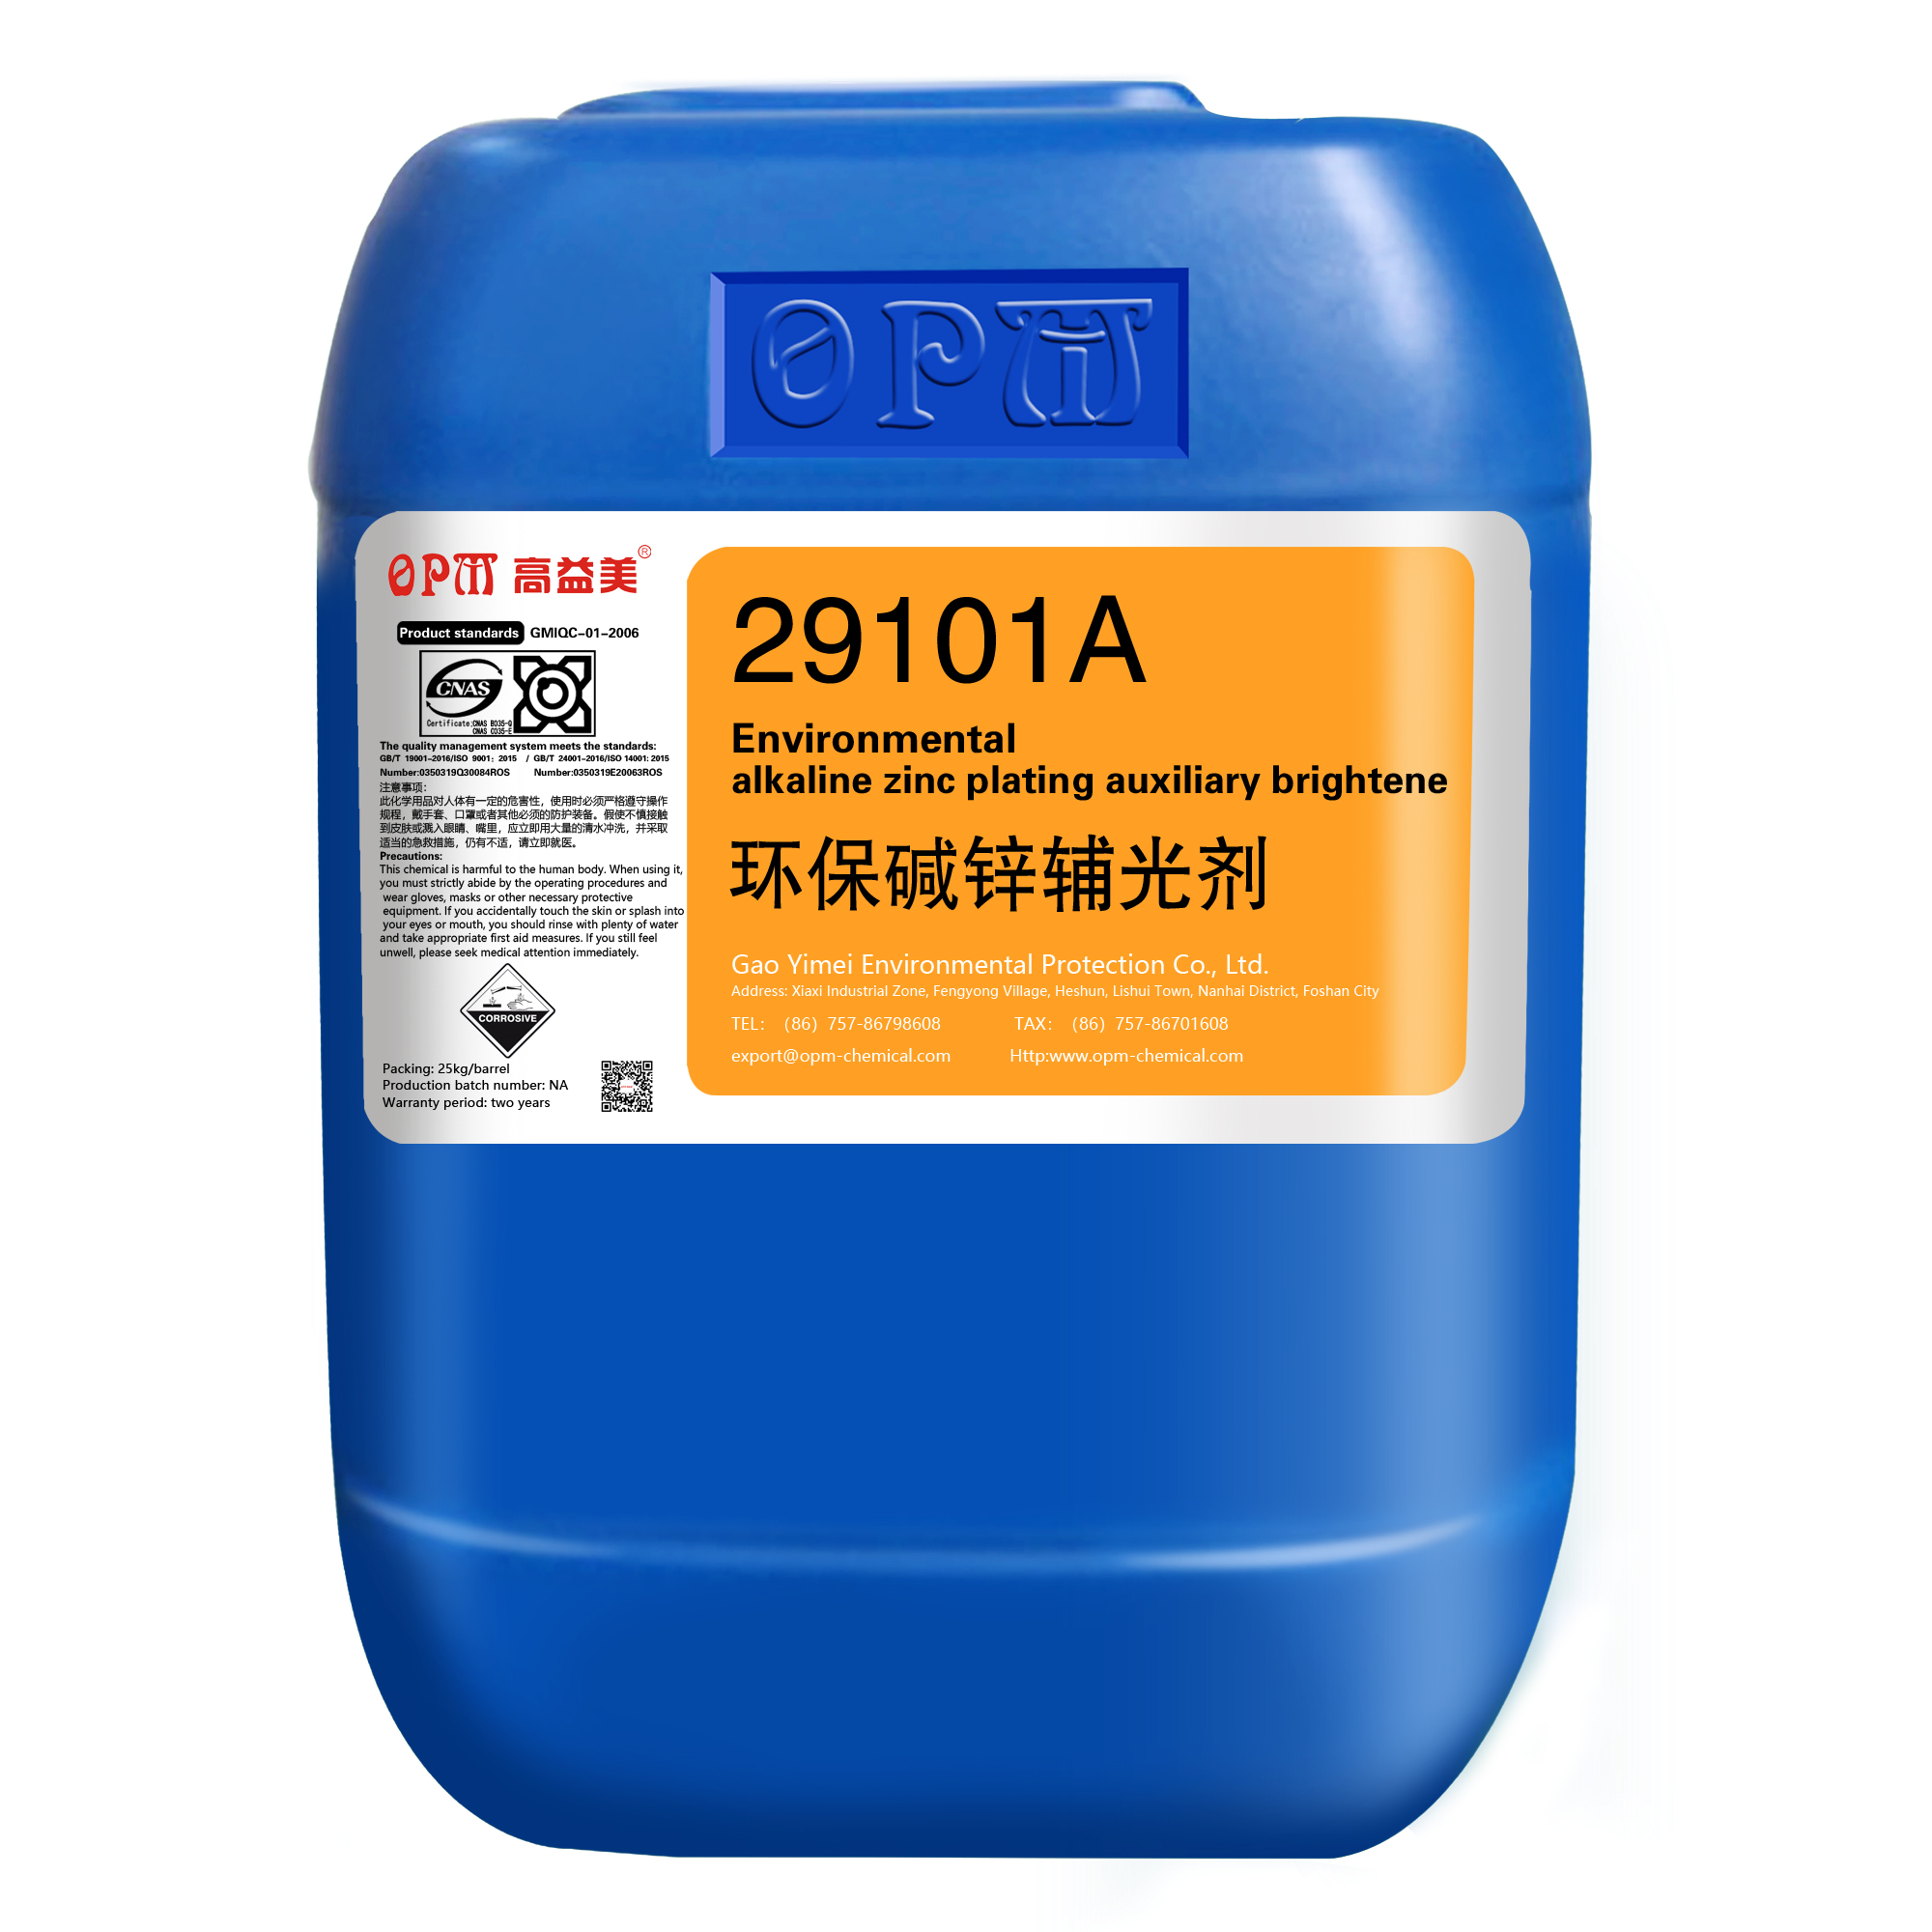 29101Environmental alkaline zinc plating auxiliary brightener